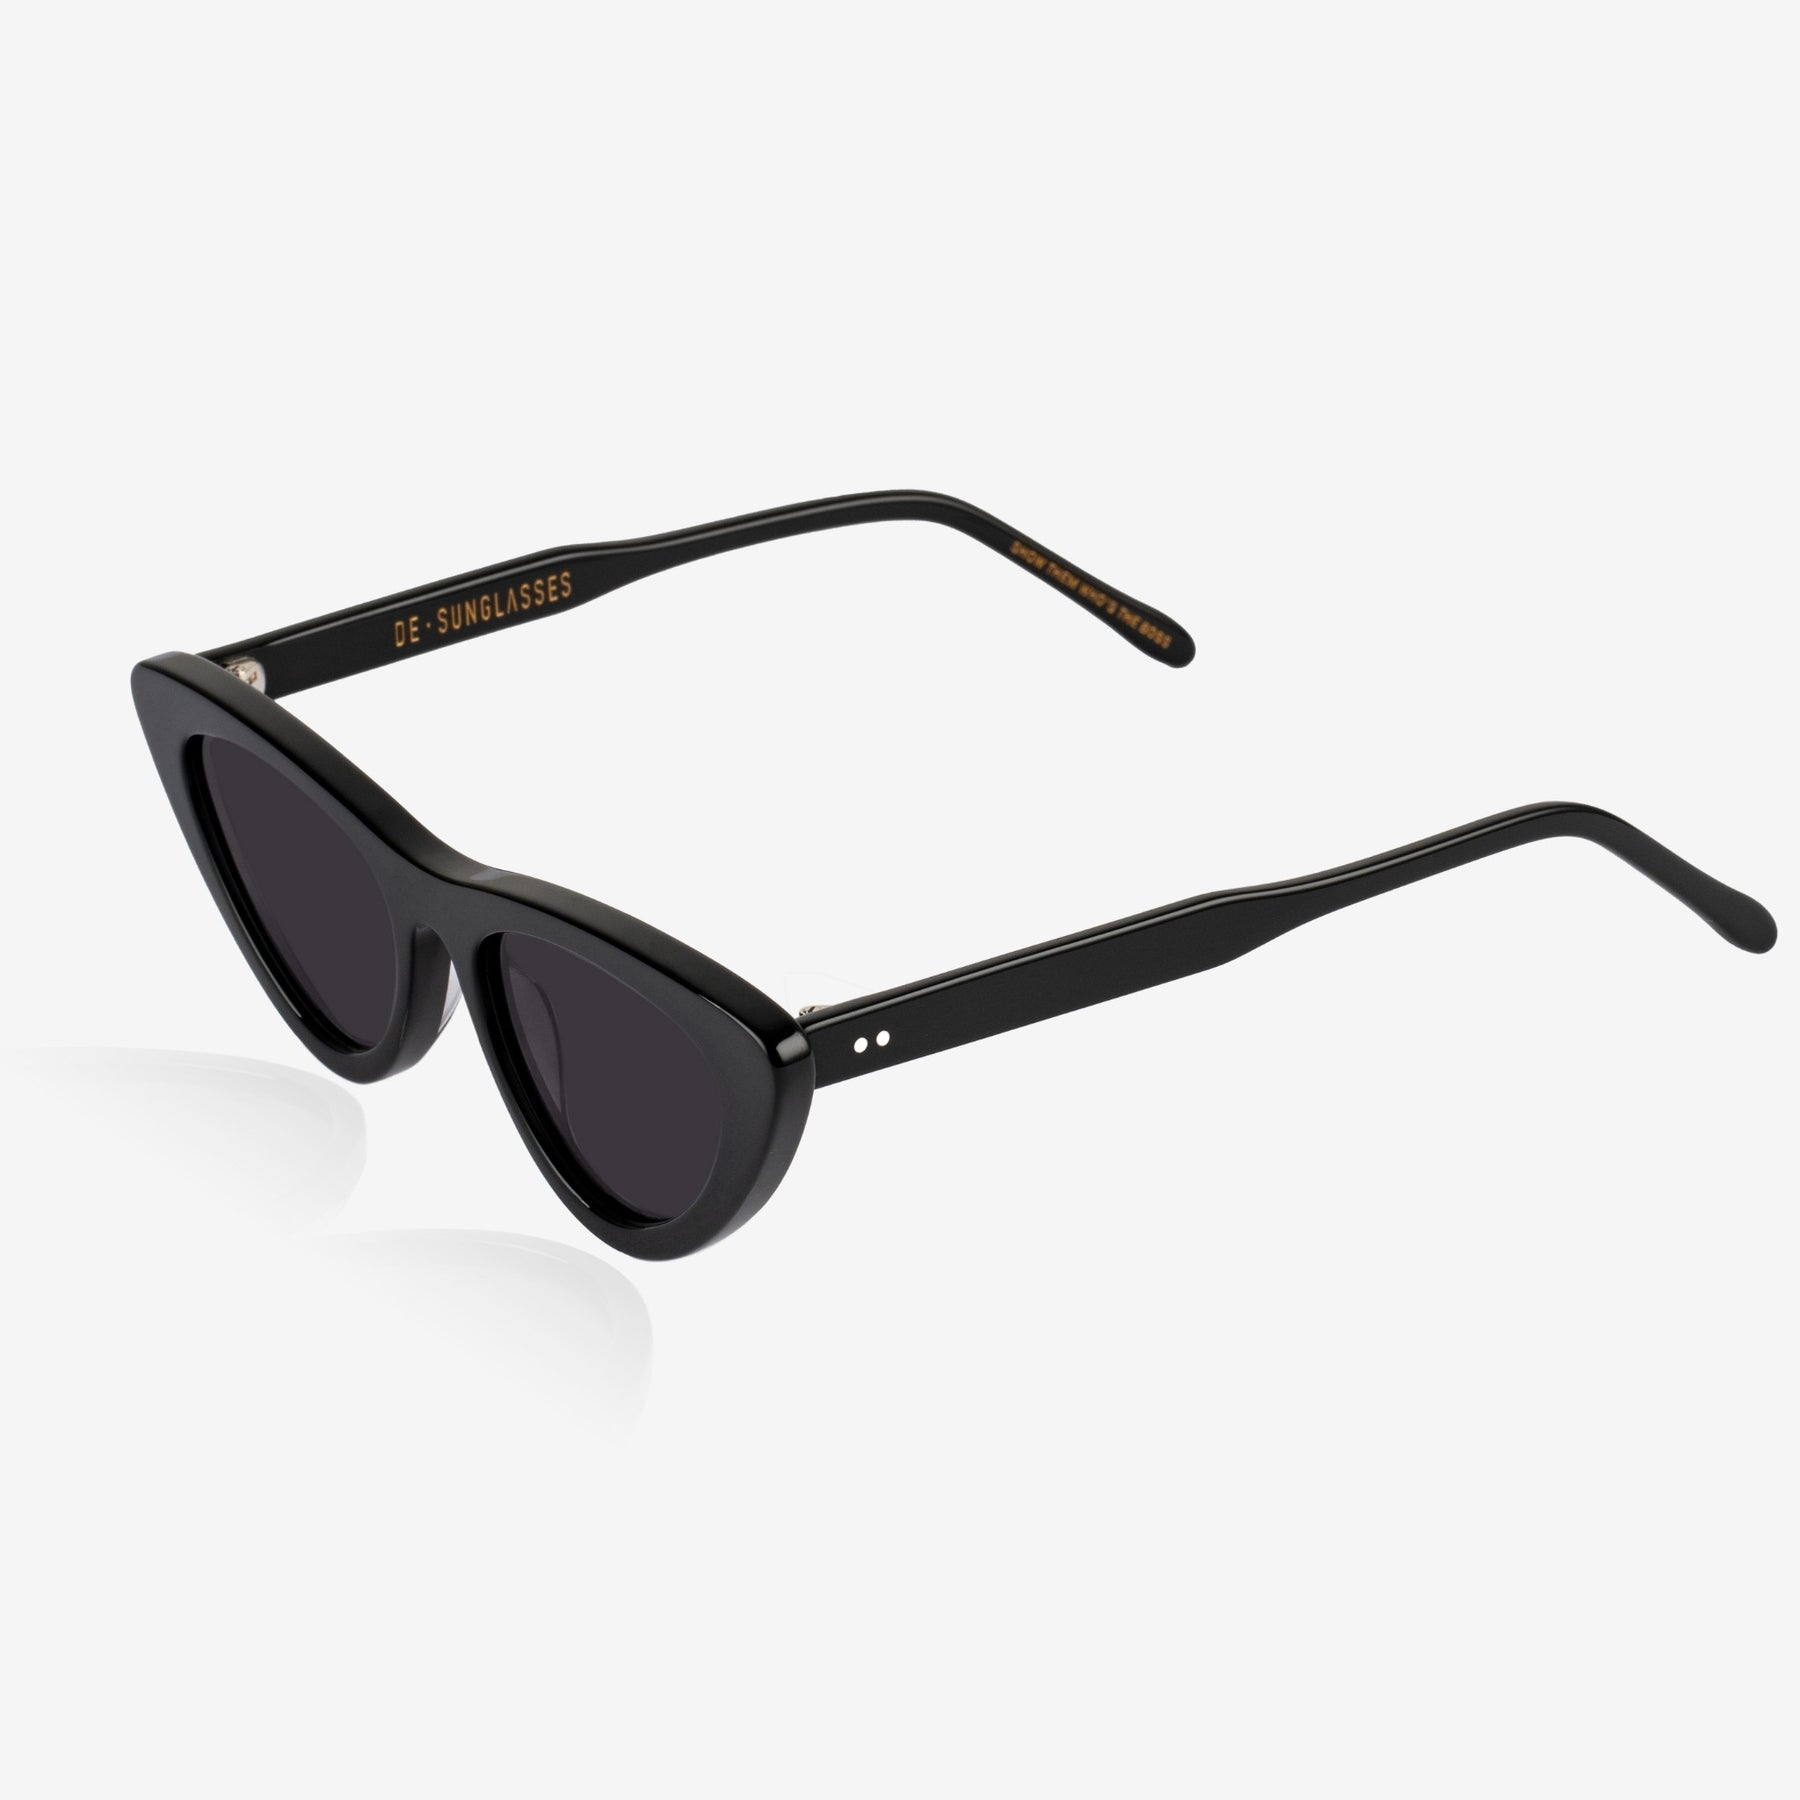 De-sunglasses| Fez black | Sunglasses for men and women